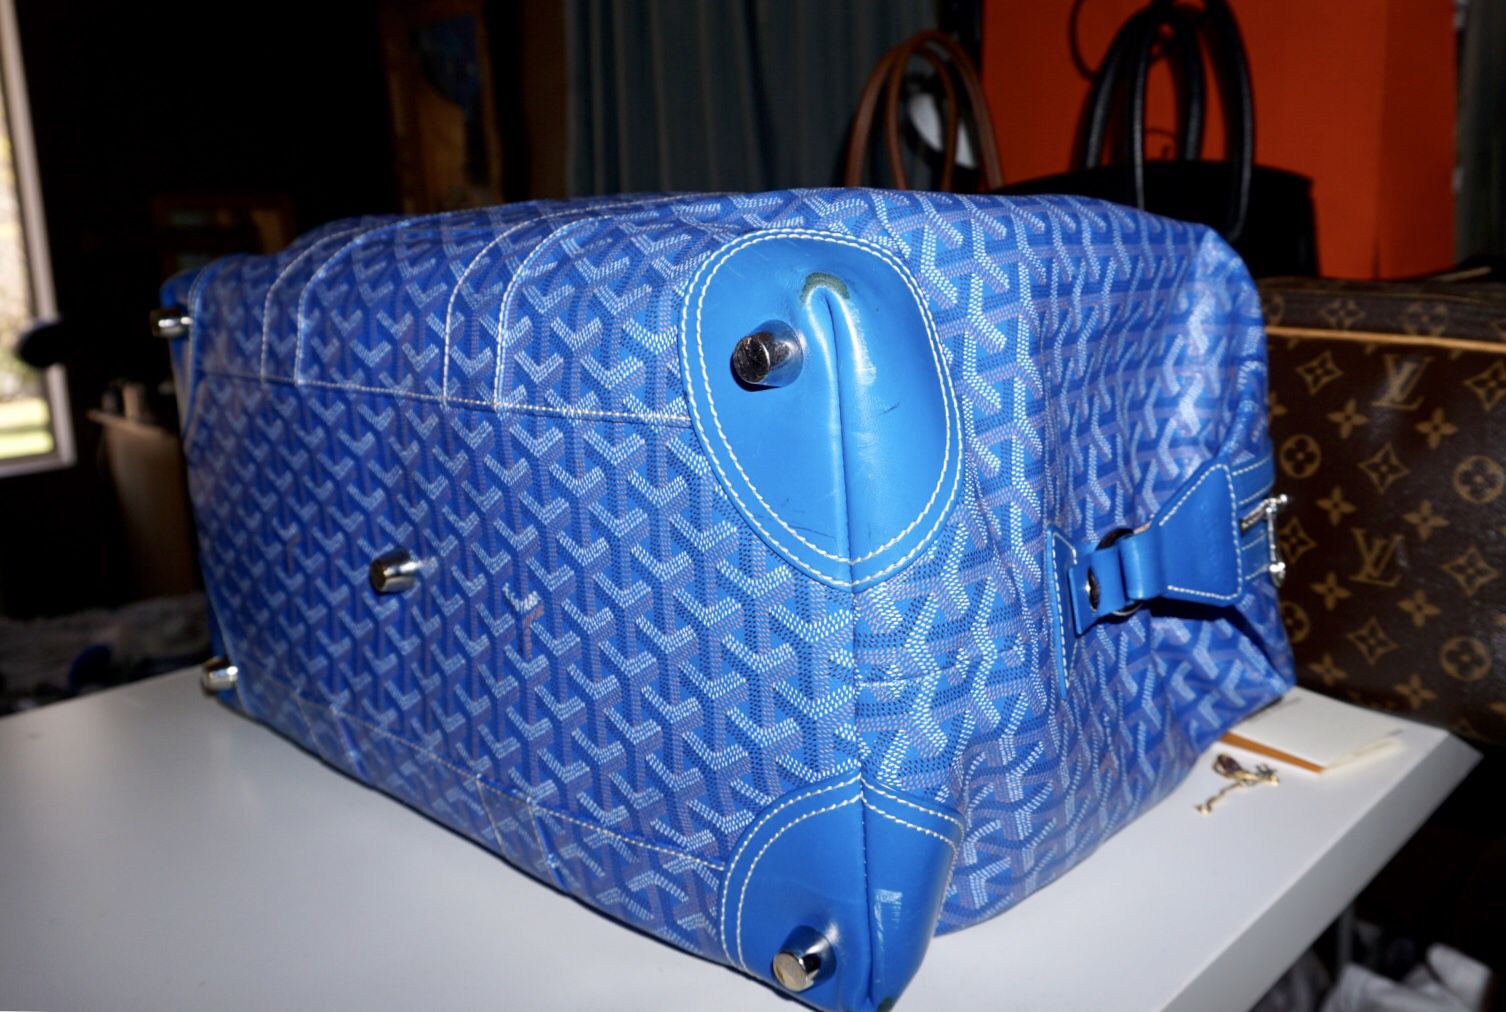 GoYard Travel Duffle Bag 50cm for Sale in Alta Loma, CA - OfferUp